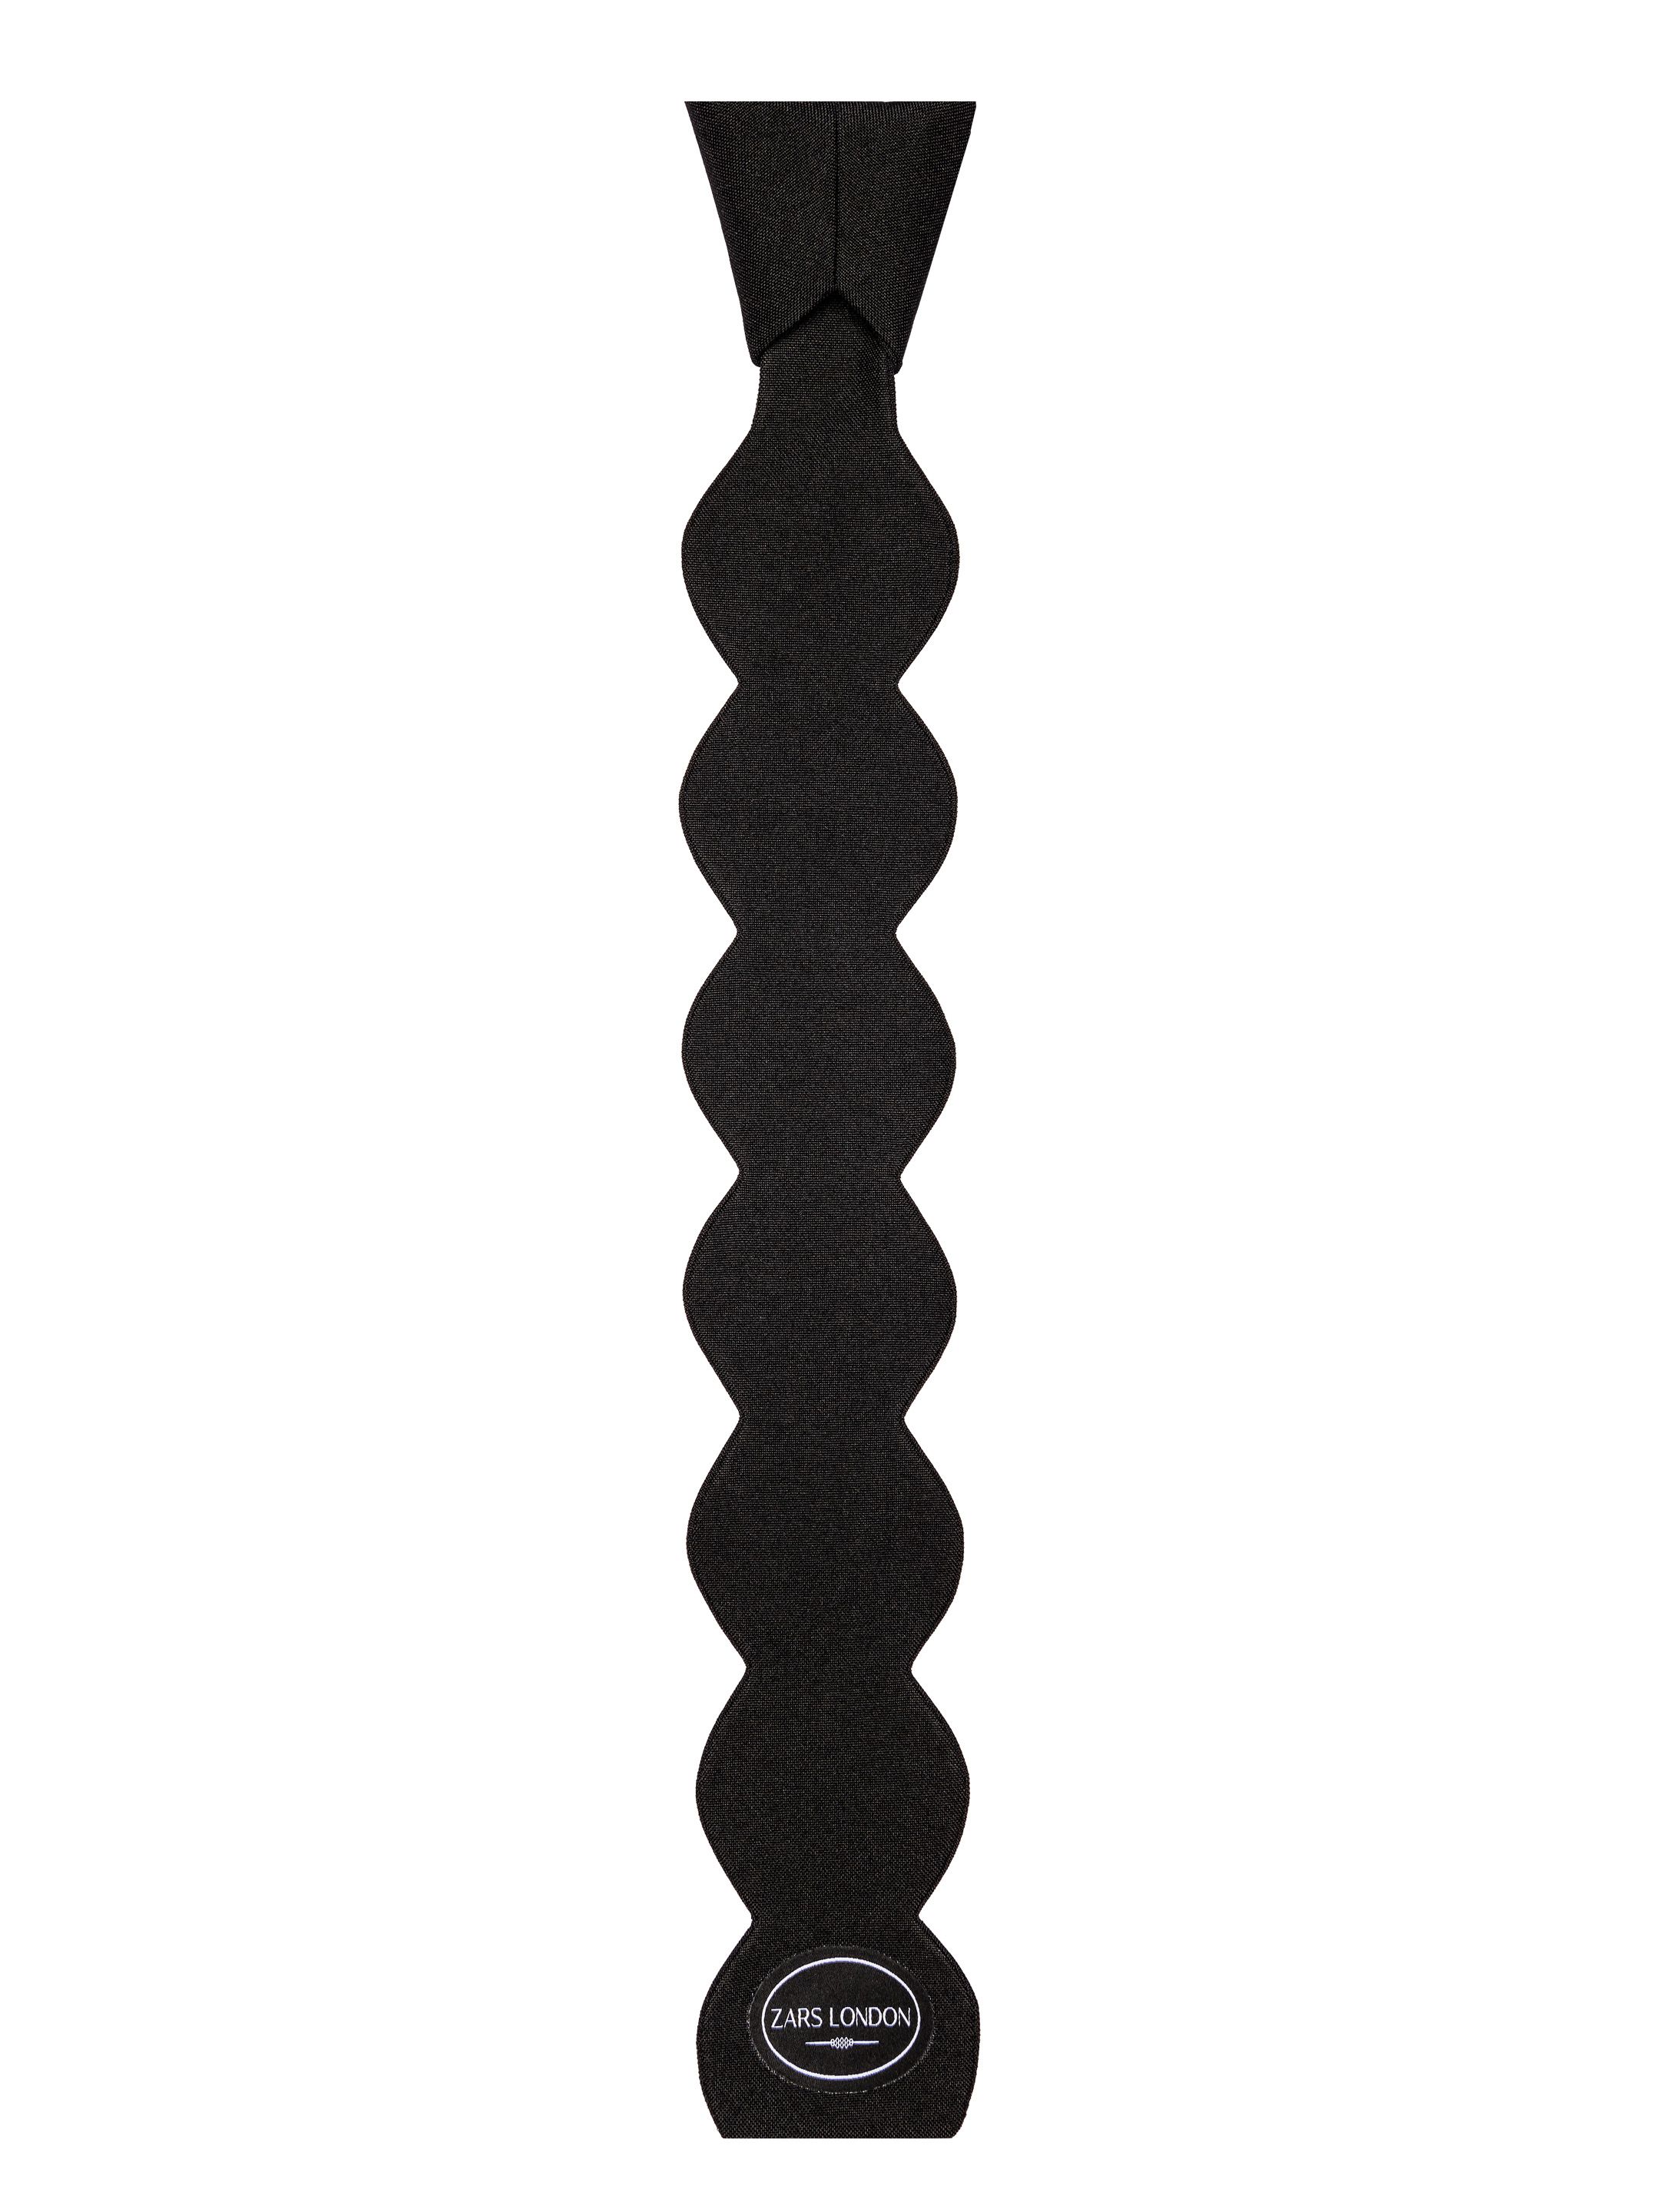 The Curve Tie